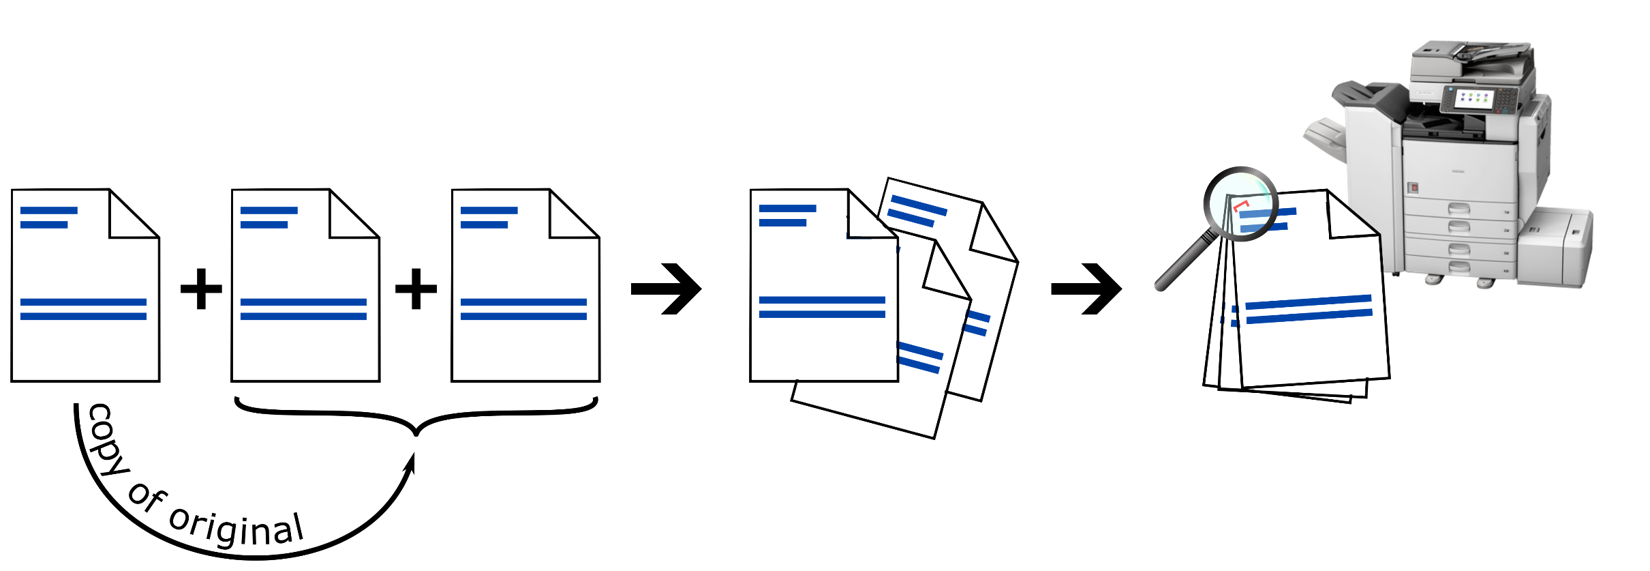 duplicate or triplicate and staple